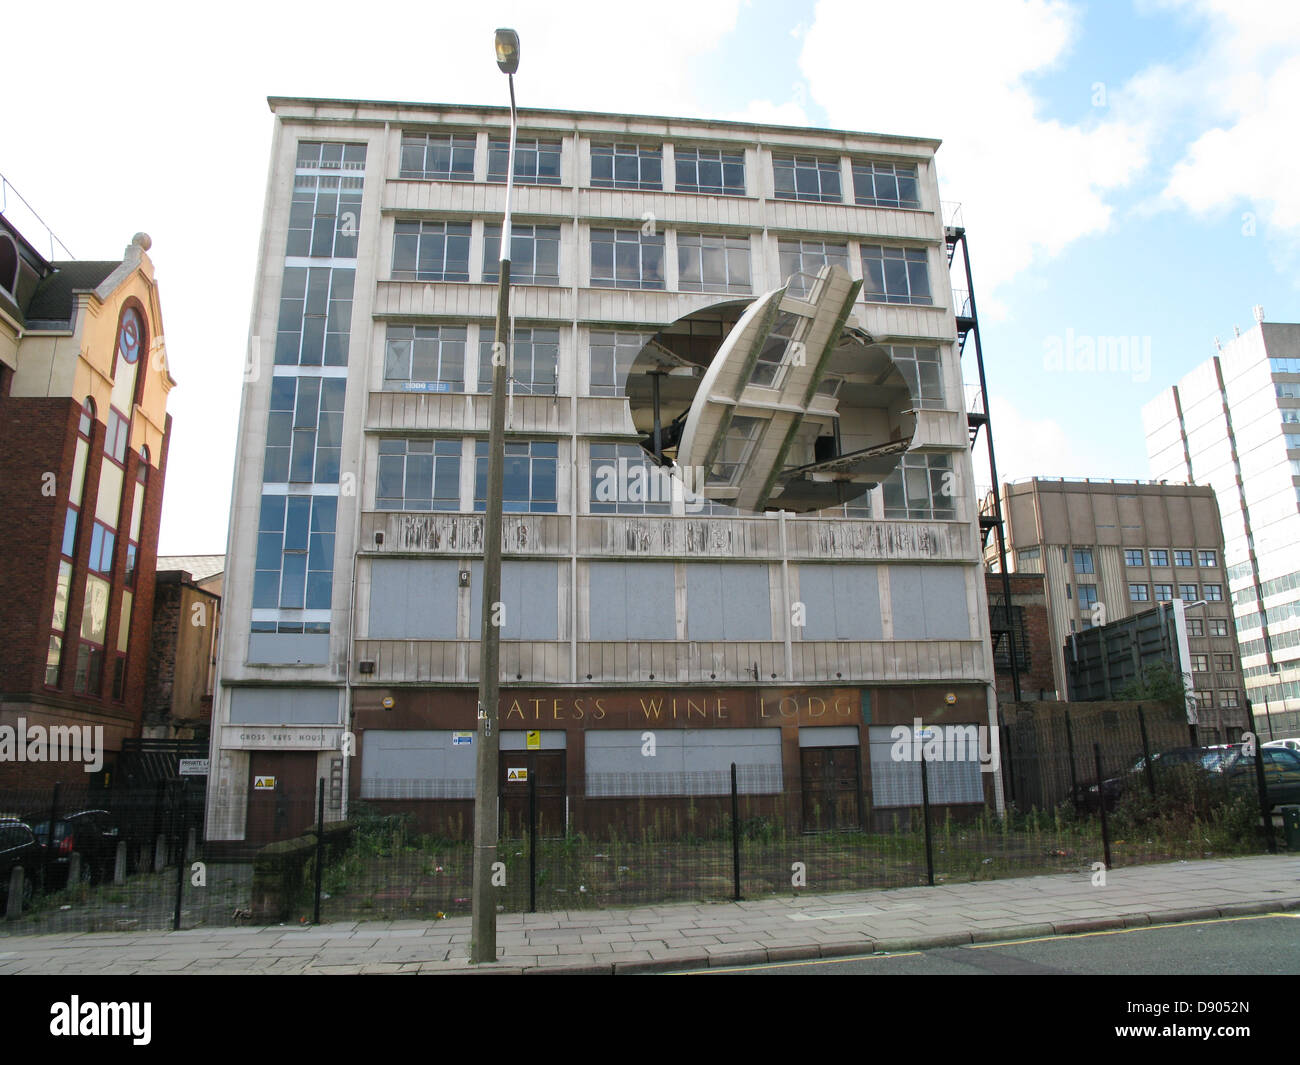 "Umdrehen der Ort" - Bildhauers Richard Wilson für Liverpools Kulturhauptstadt Europas Stockfoto